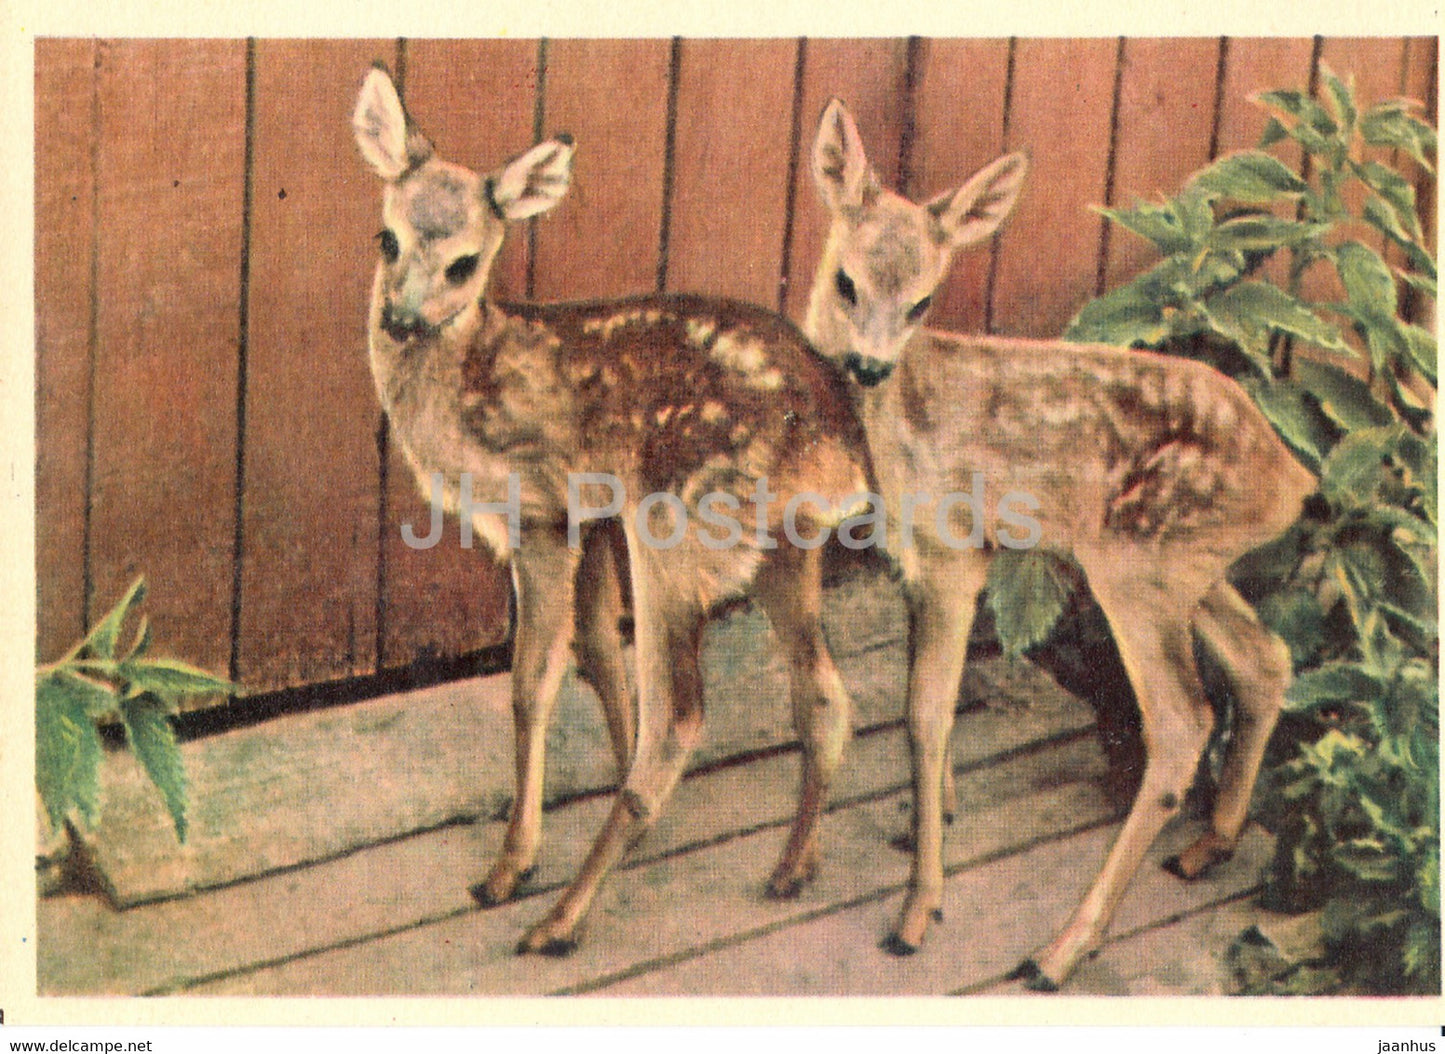 Deer - Moscow Zoo - 1963 - Russia USSR - unused - JH Postcards